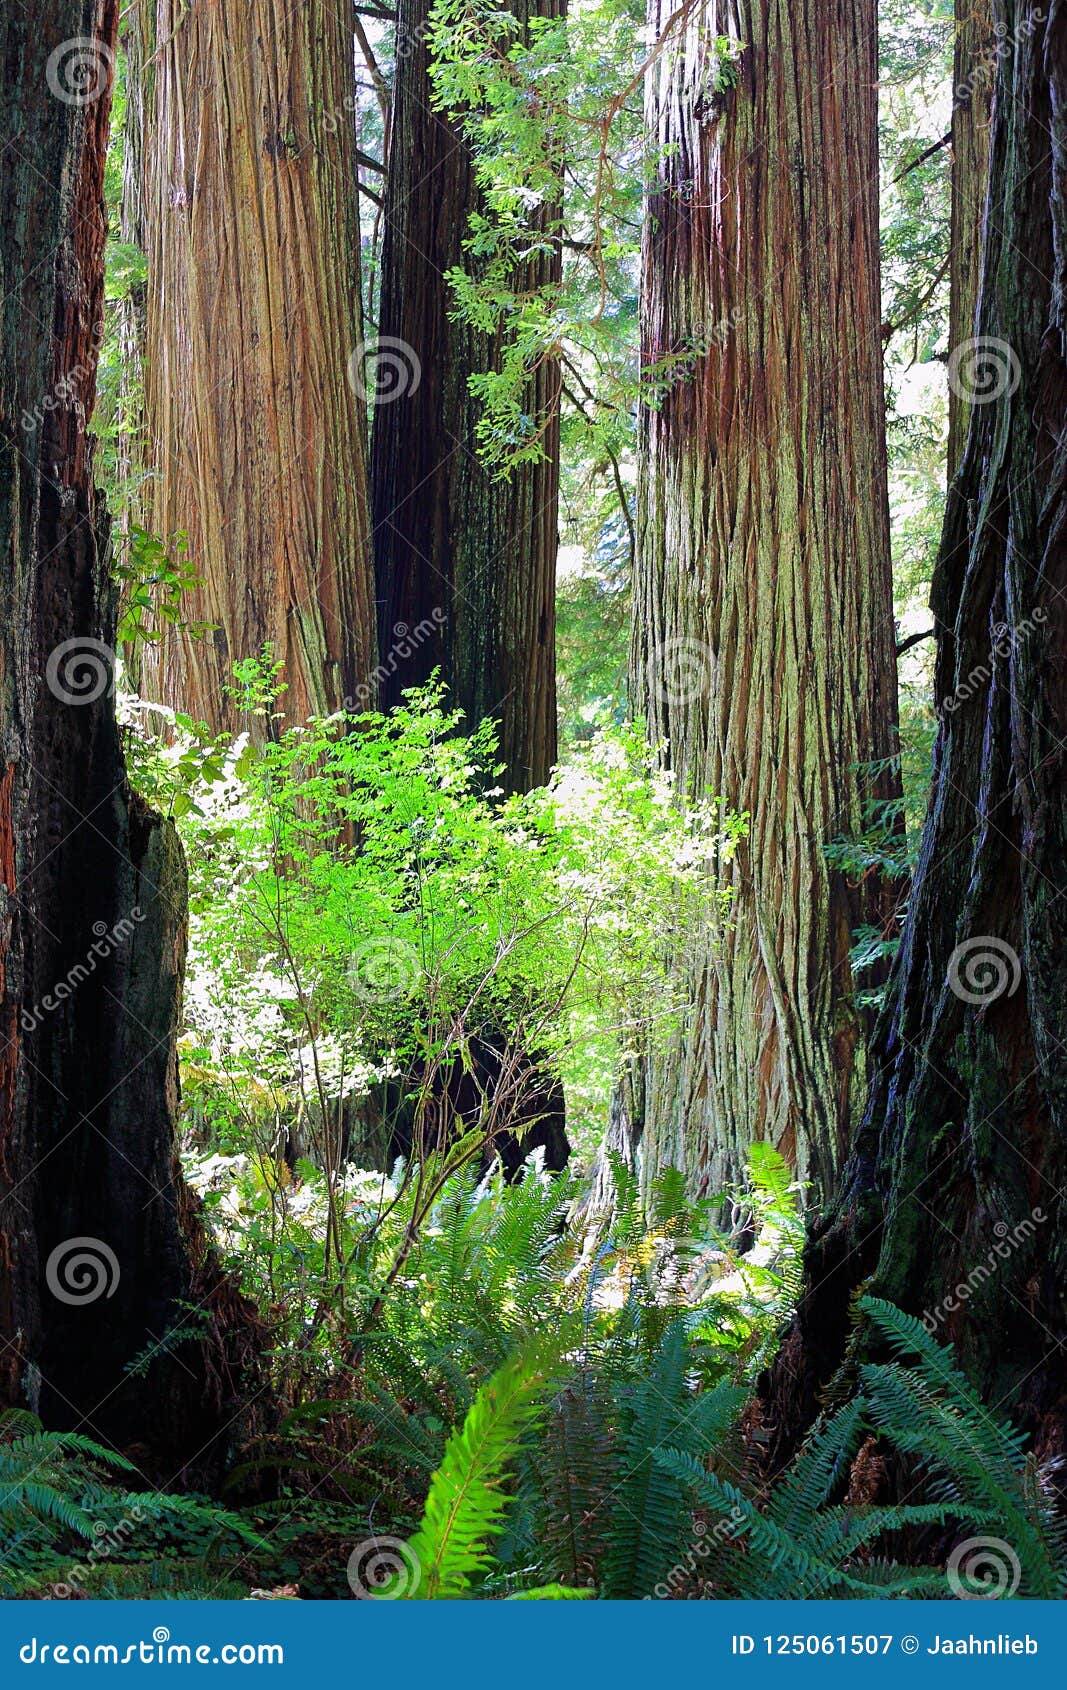 coastal redwoods, sequoia sempervirens, in del norte state park, unesco world heritage site, northern california